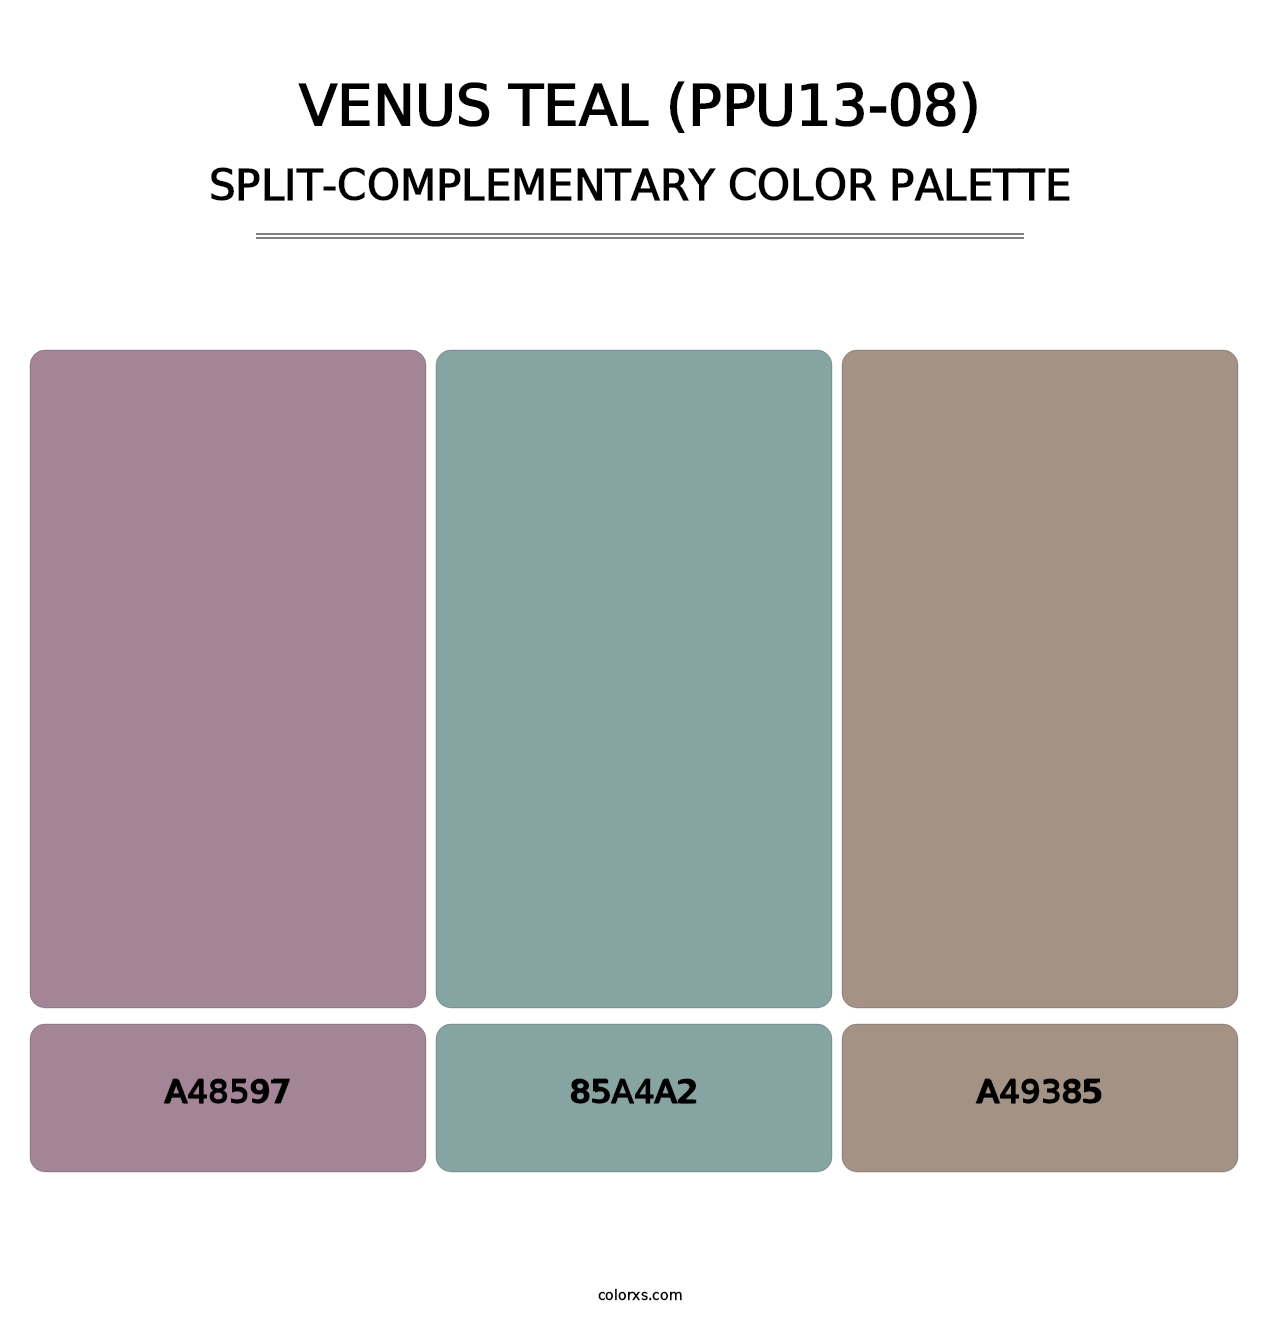 Venus Teal (PPU13-08) - Split-Complementary Color Palette